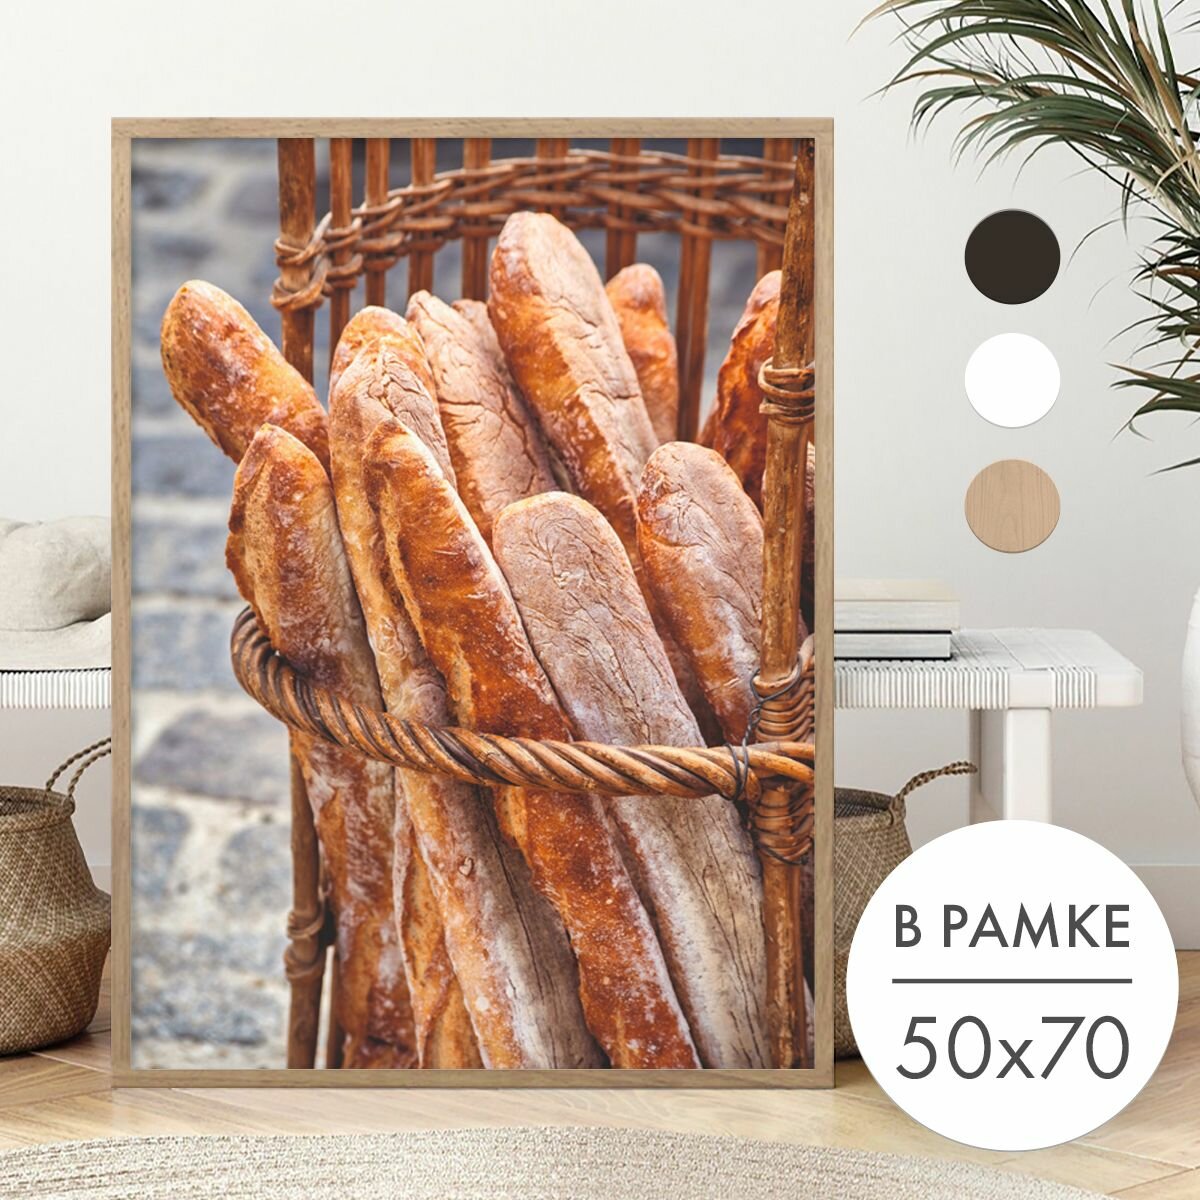 Постер 50х70 В рамке "Французский багет" для интерьера